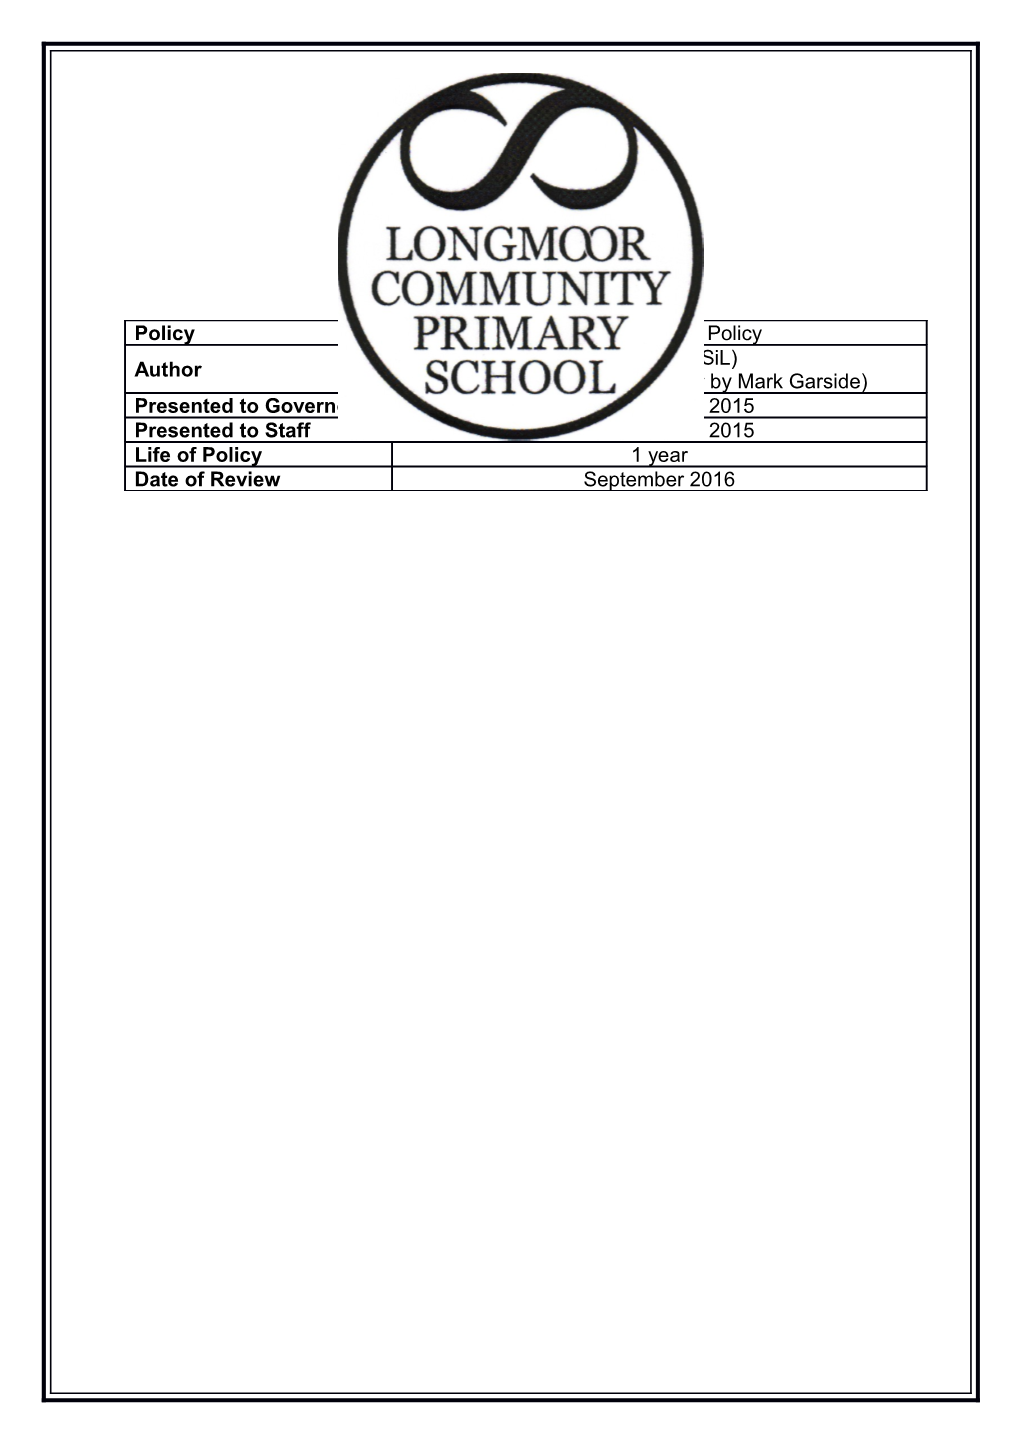 Longmoor Community Primary School